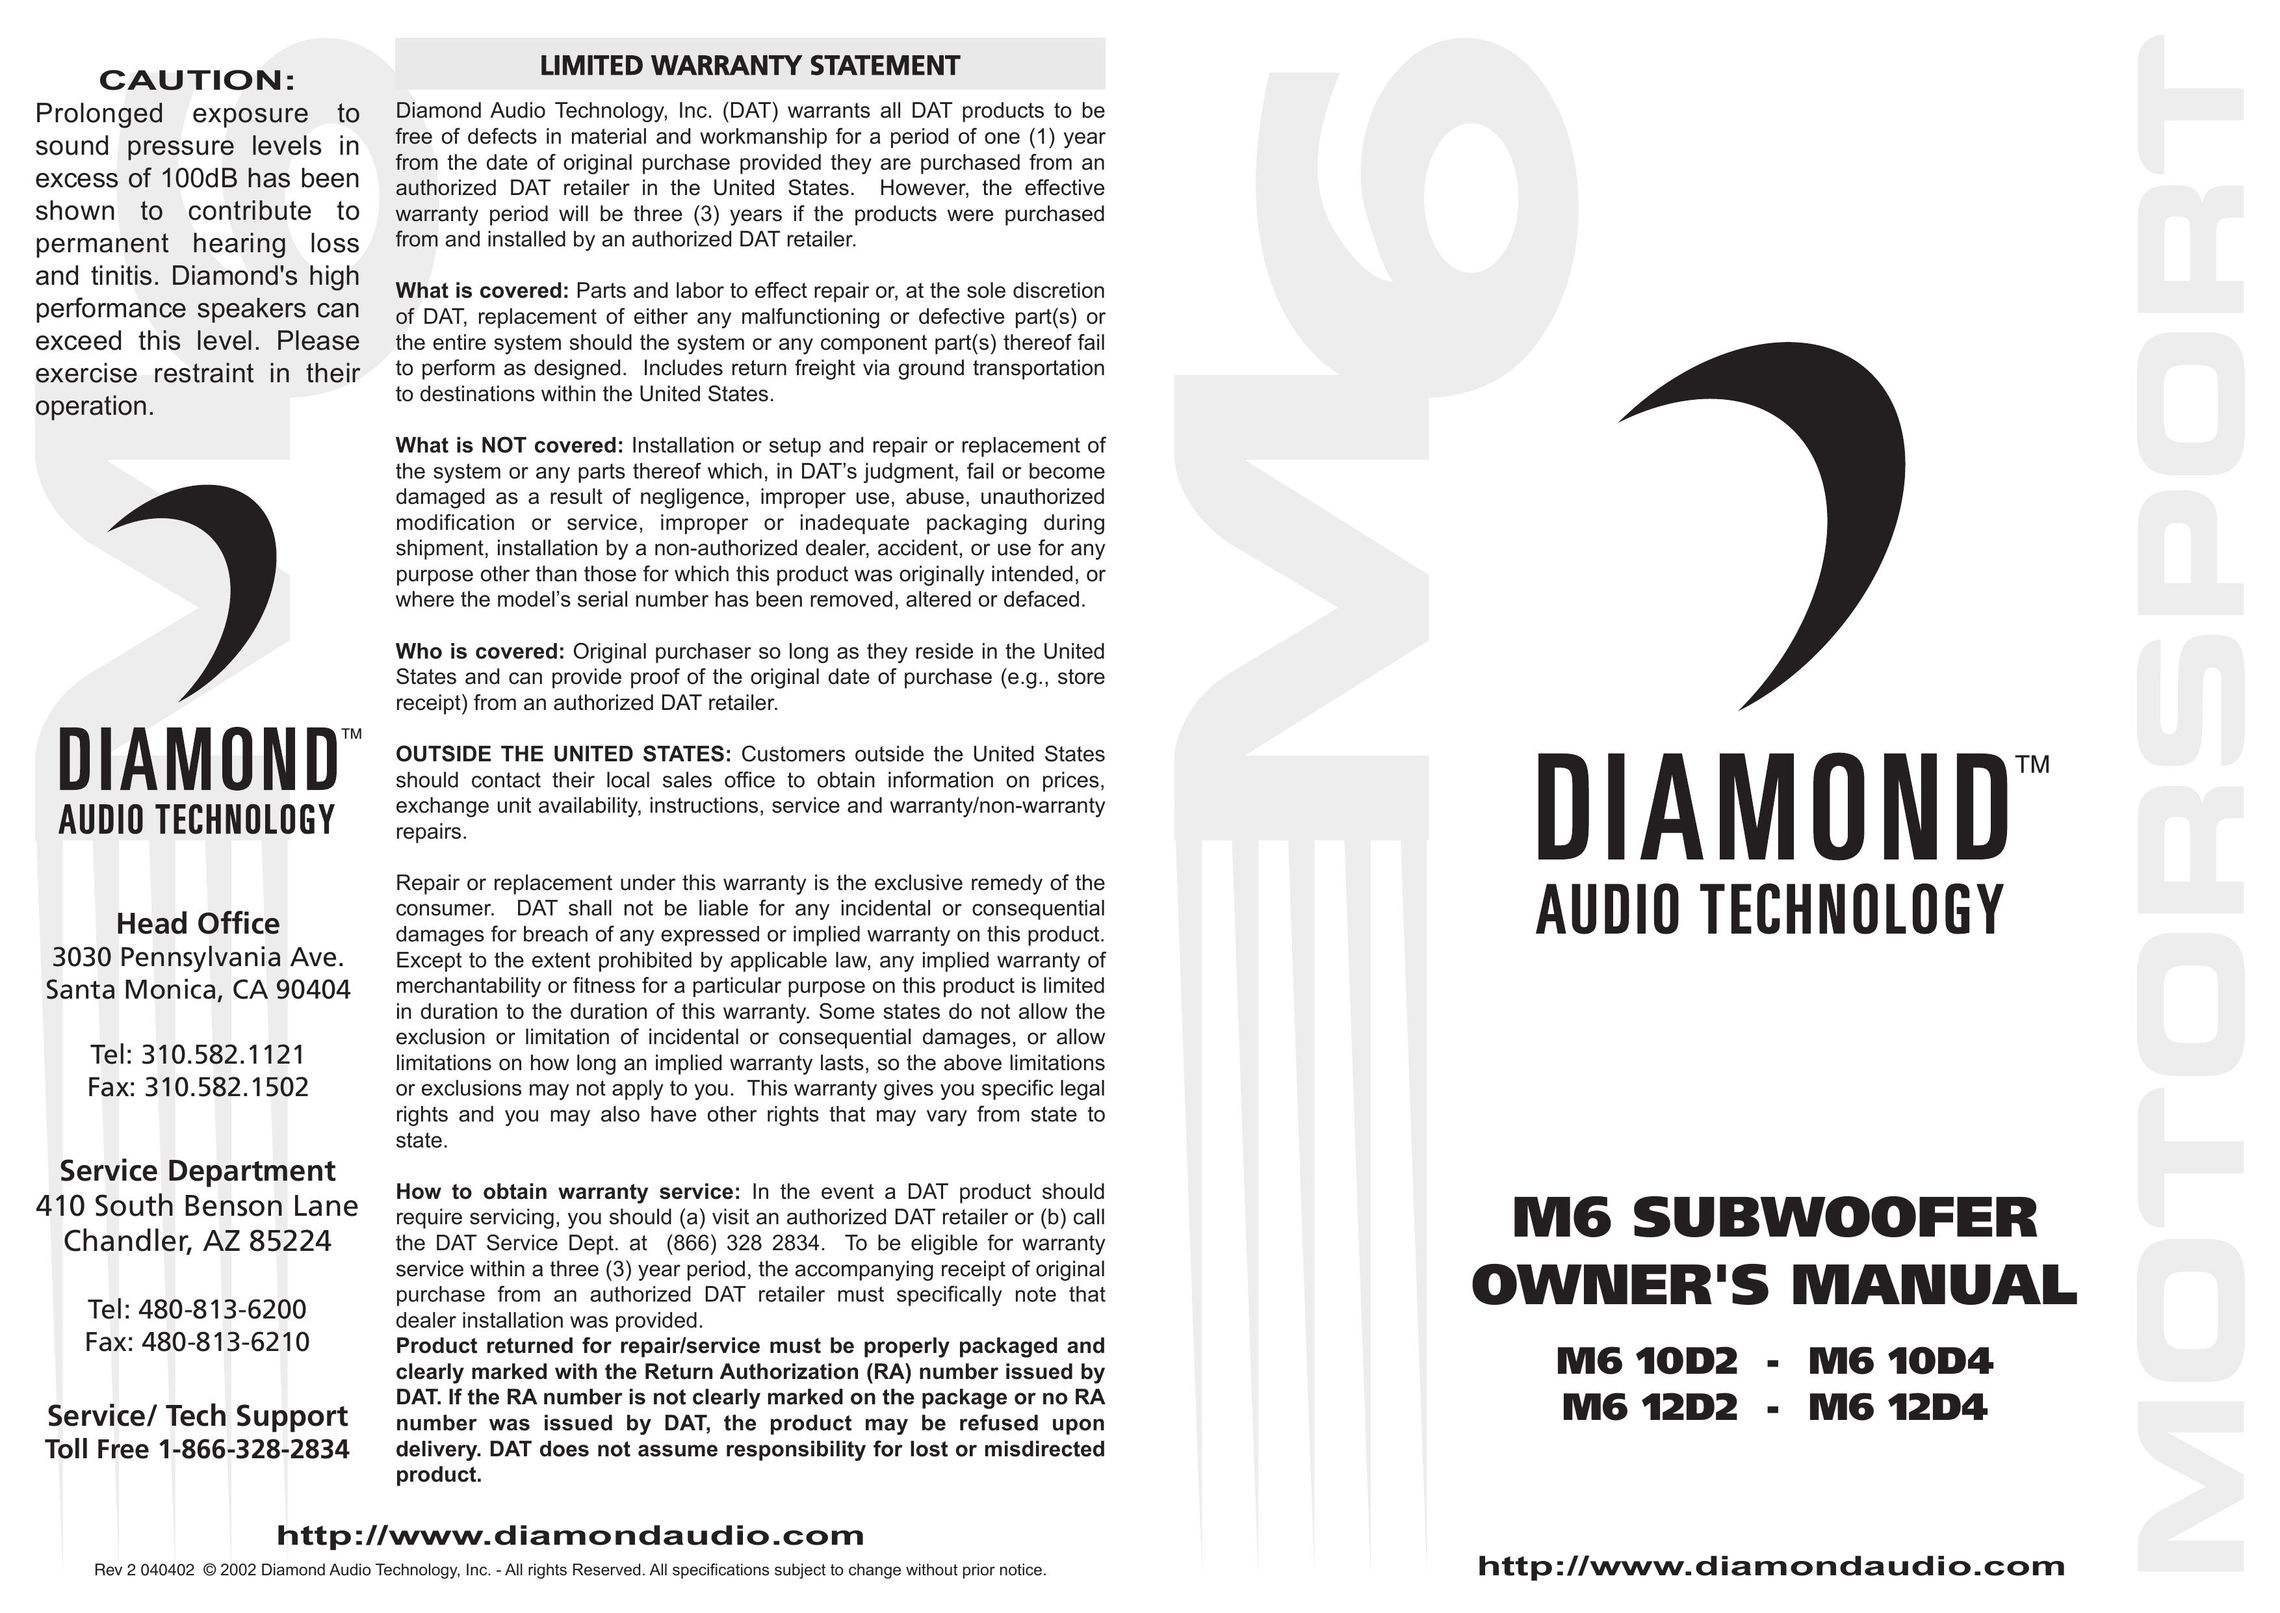 Diamond Audio Technology M6 12D2 Speaker User Manual